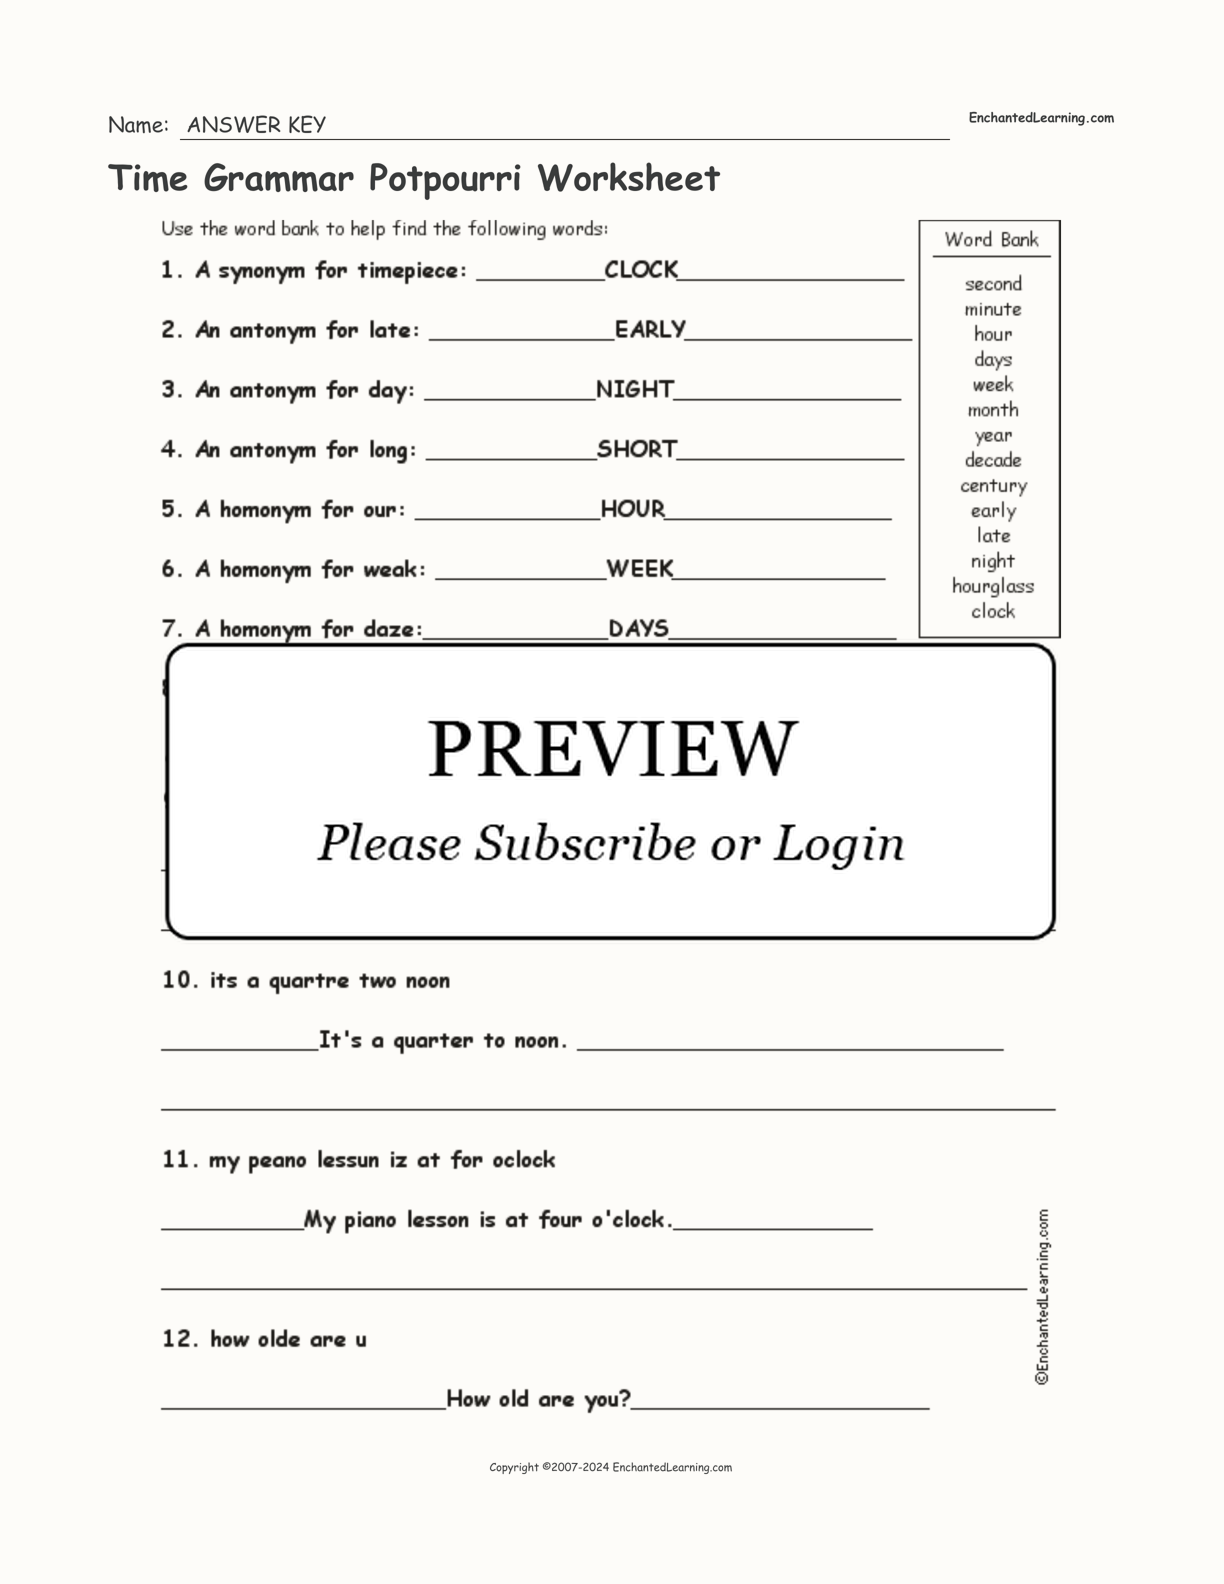 Time Grammar Potpourri Worksheet interactive worksheet page 2